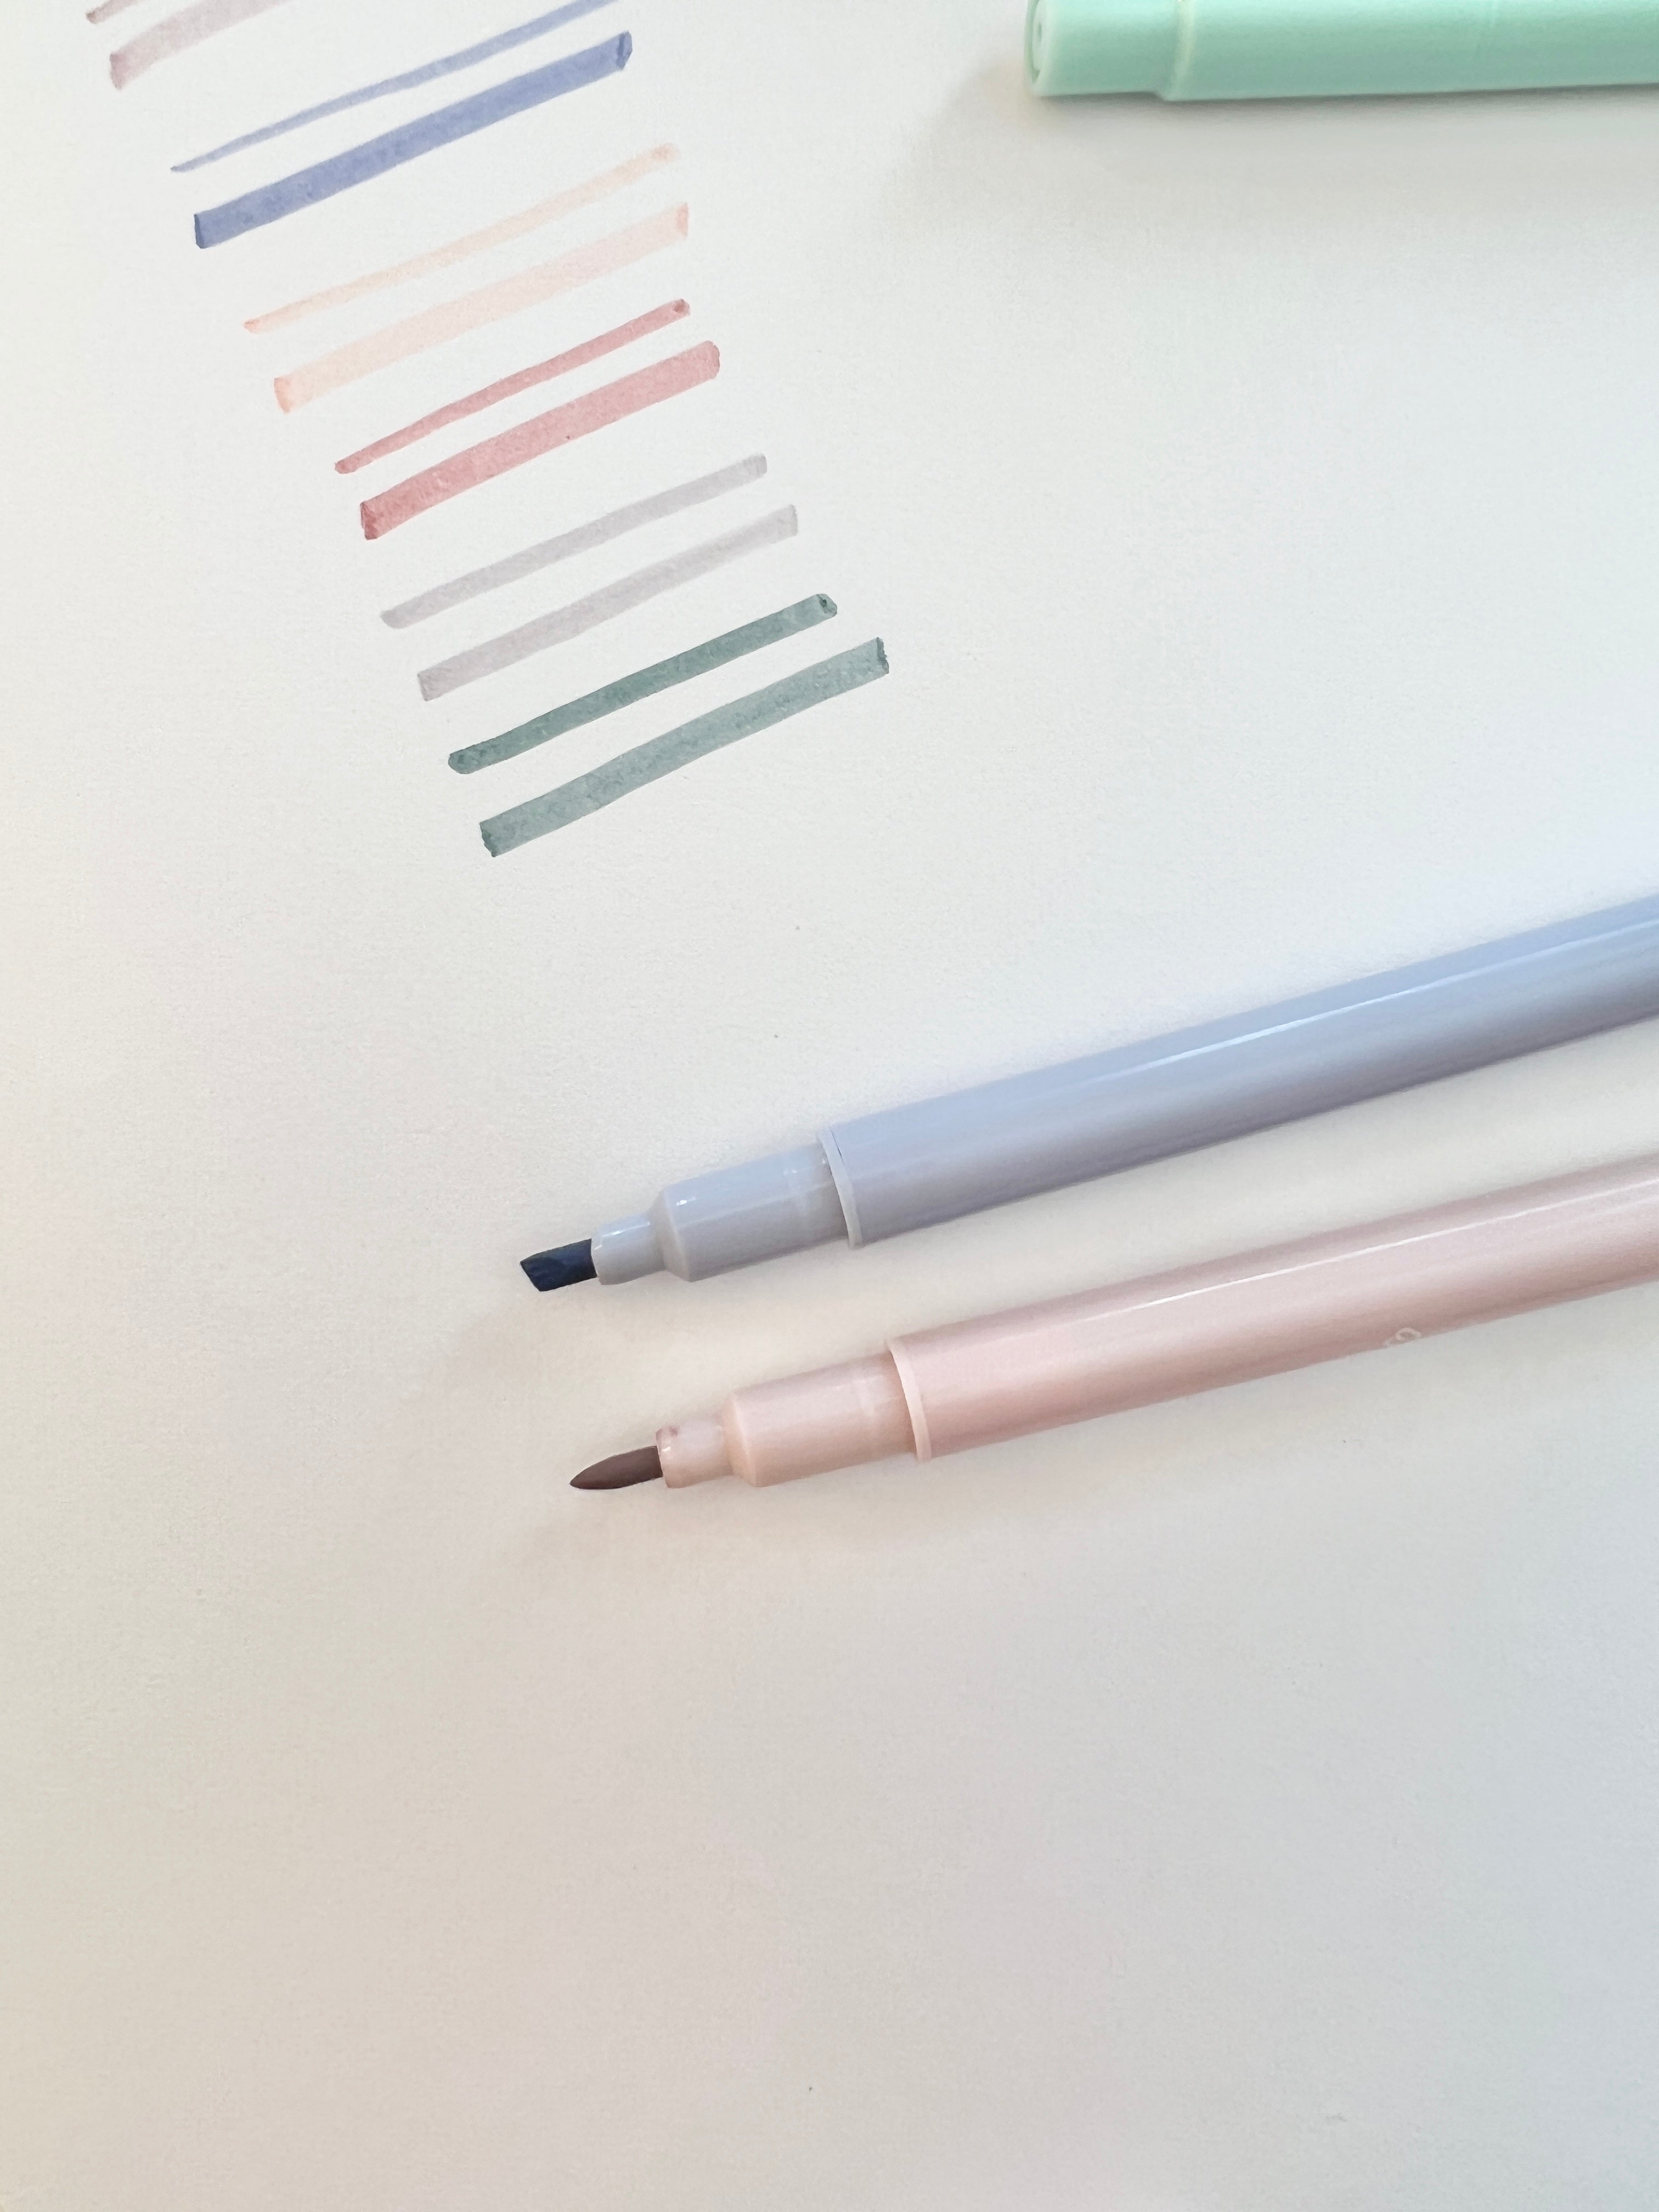 6 colors Soft Brush Fluorescence Pen Set Pastel Markers Brush Set Art Mild  Color Highlighter Calligraphy pens Suppli